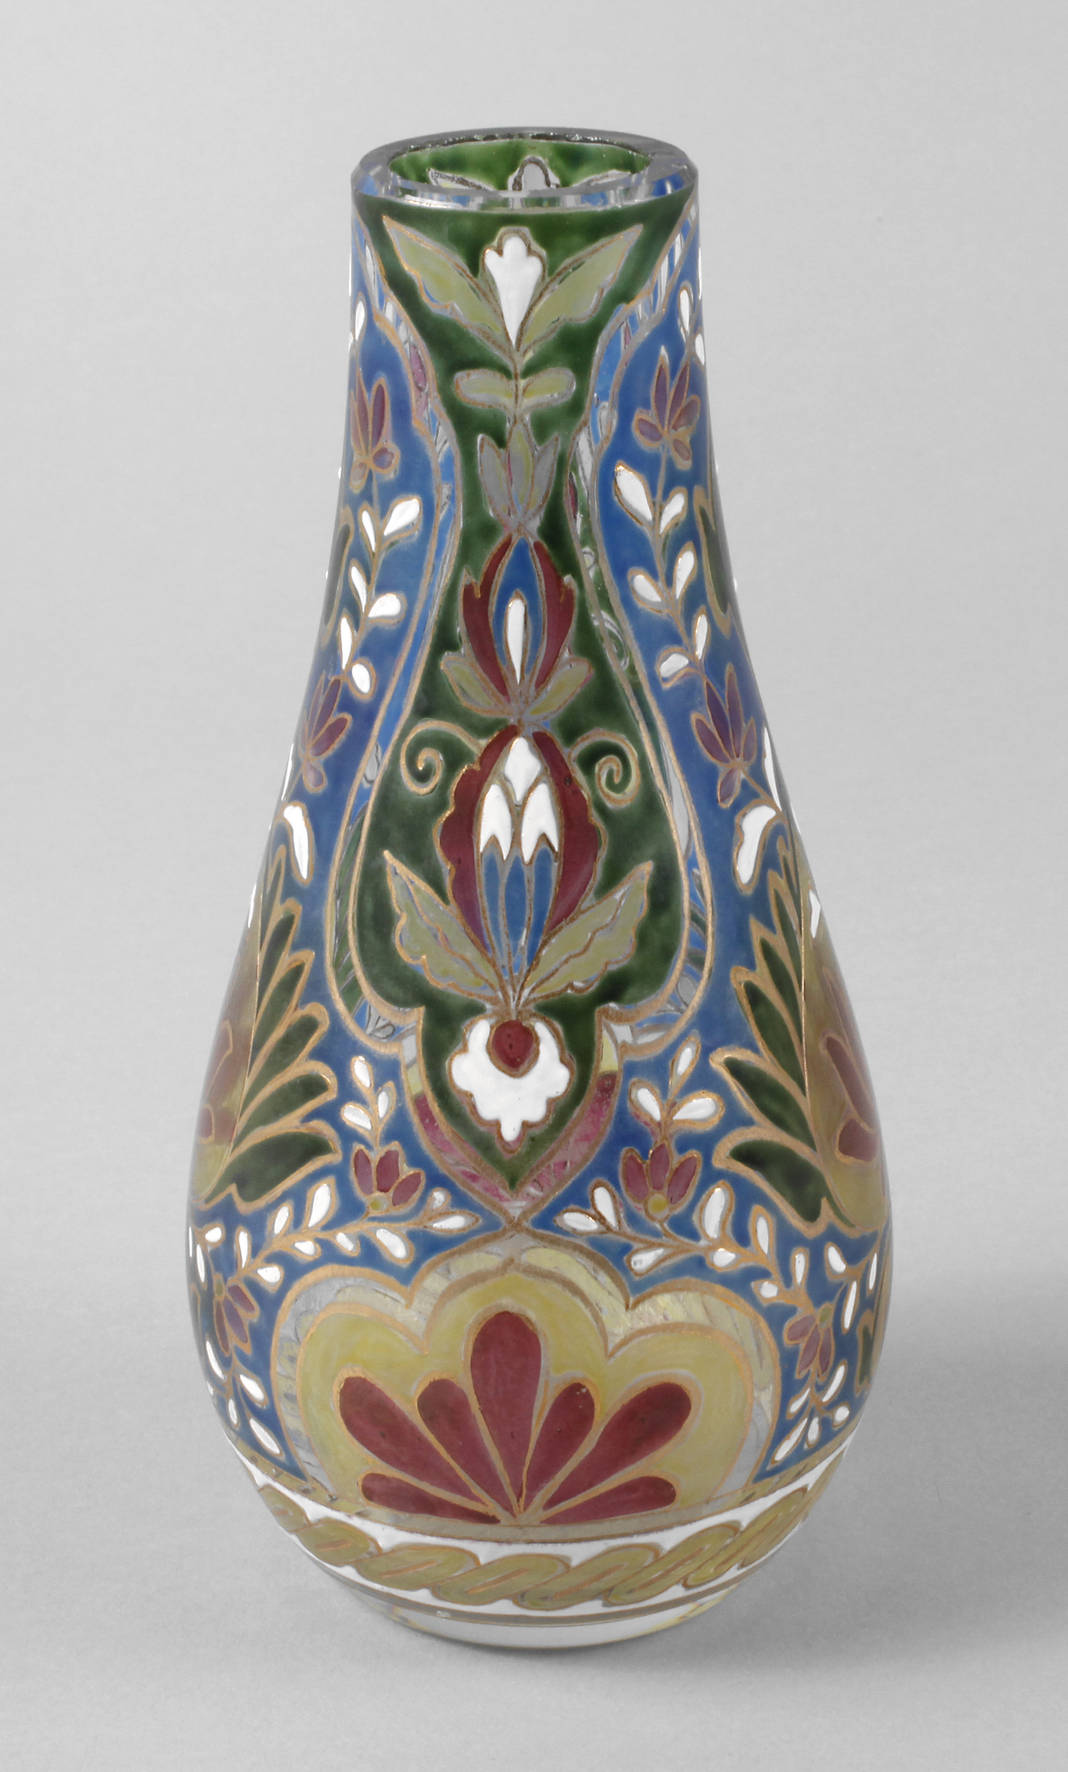 Fritz Heckert Vase ”Jodphur”